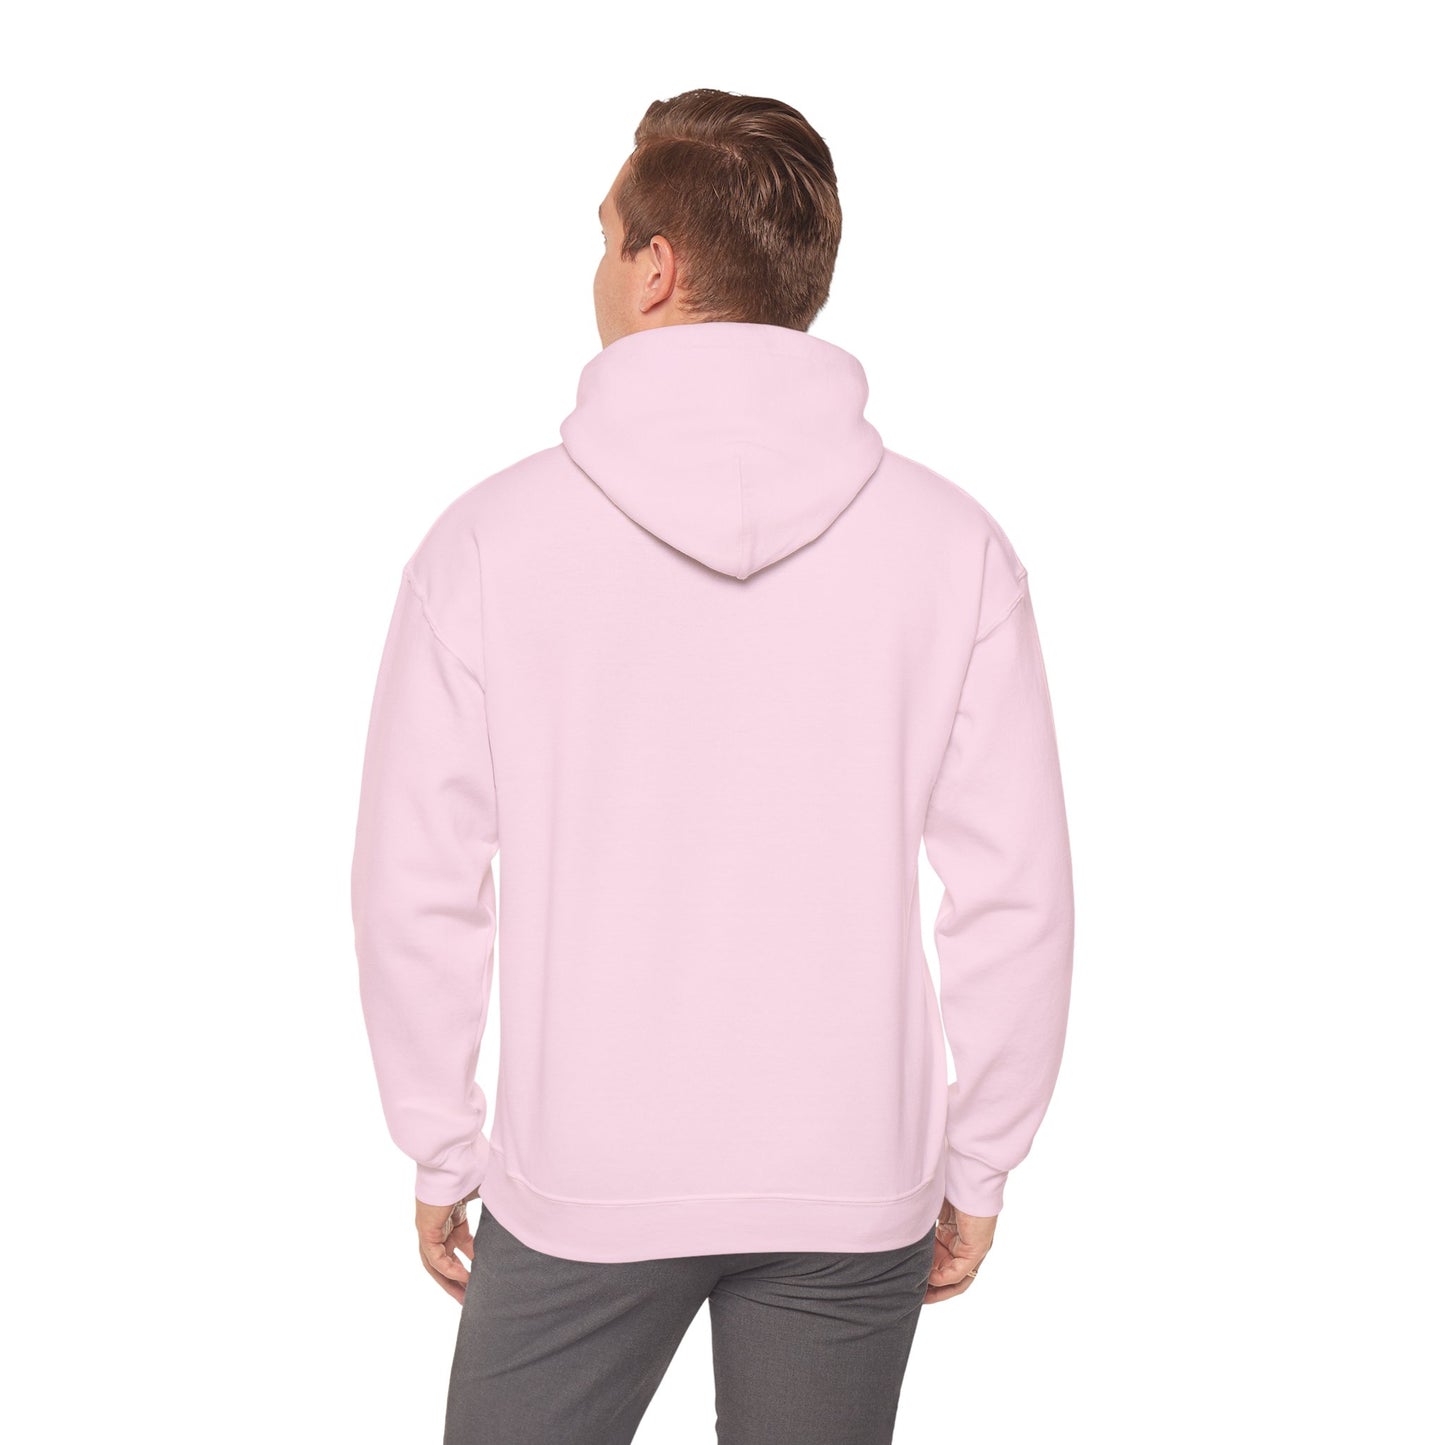 Valentine: I Am Hers - Unisex Heavy Blend™ Hooded Sweatshirt